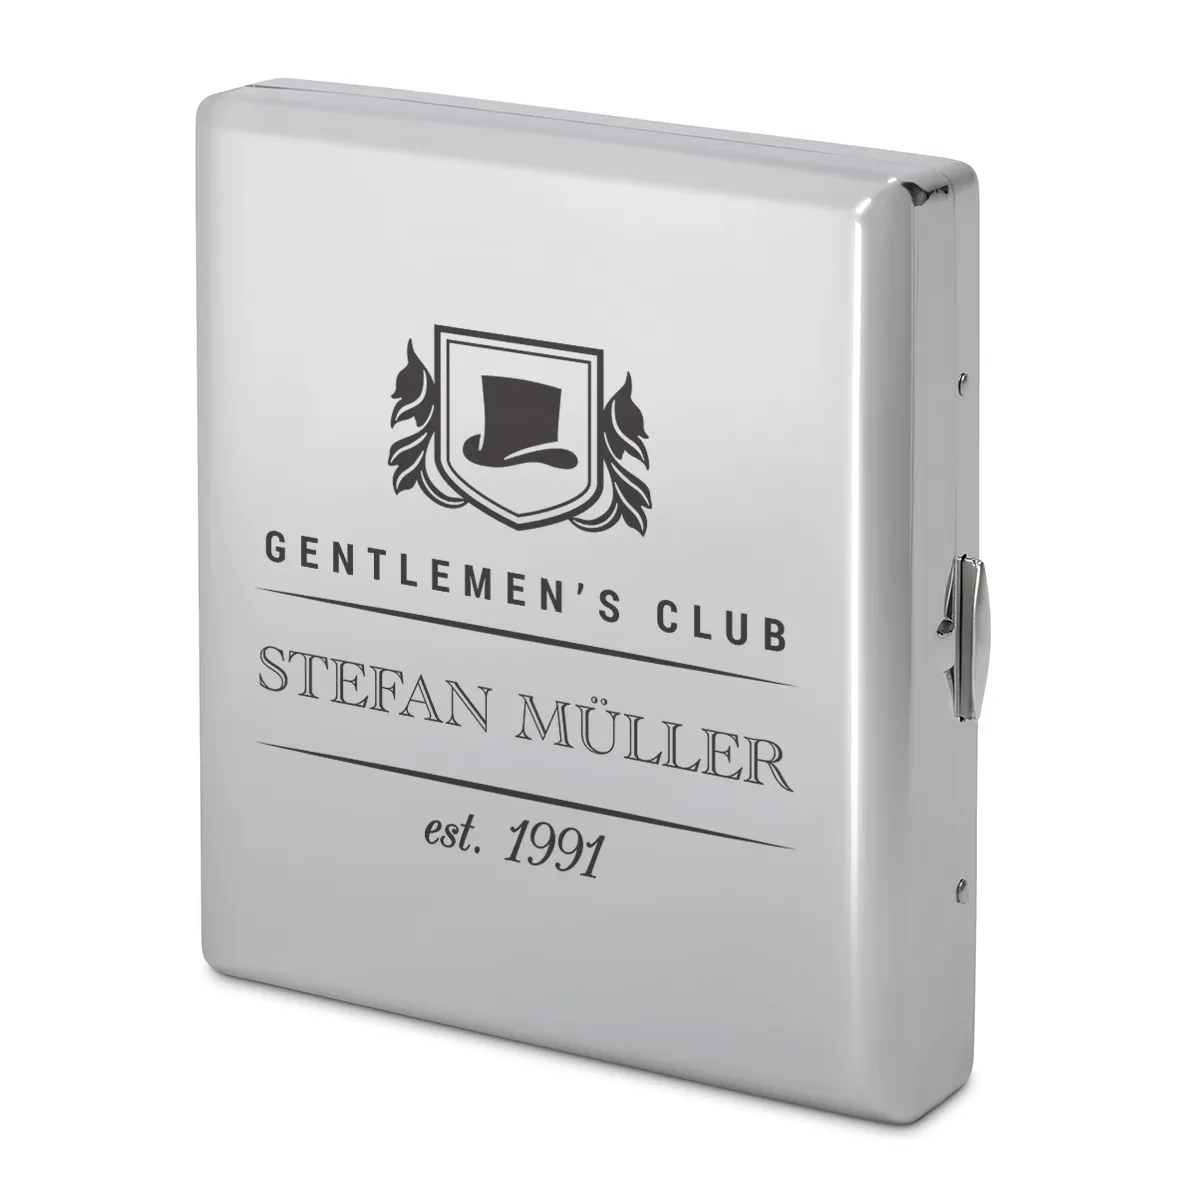 18er Zigarettenetui Chrom poliert - Gentlemen's Club